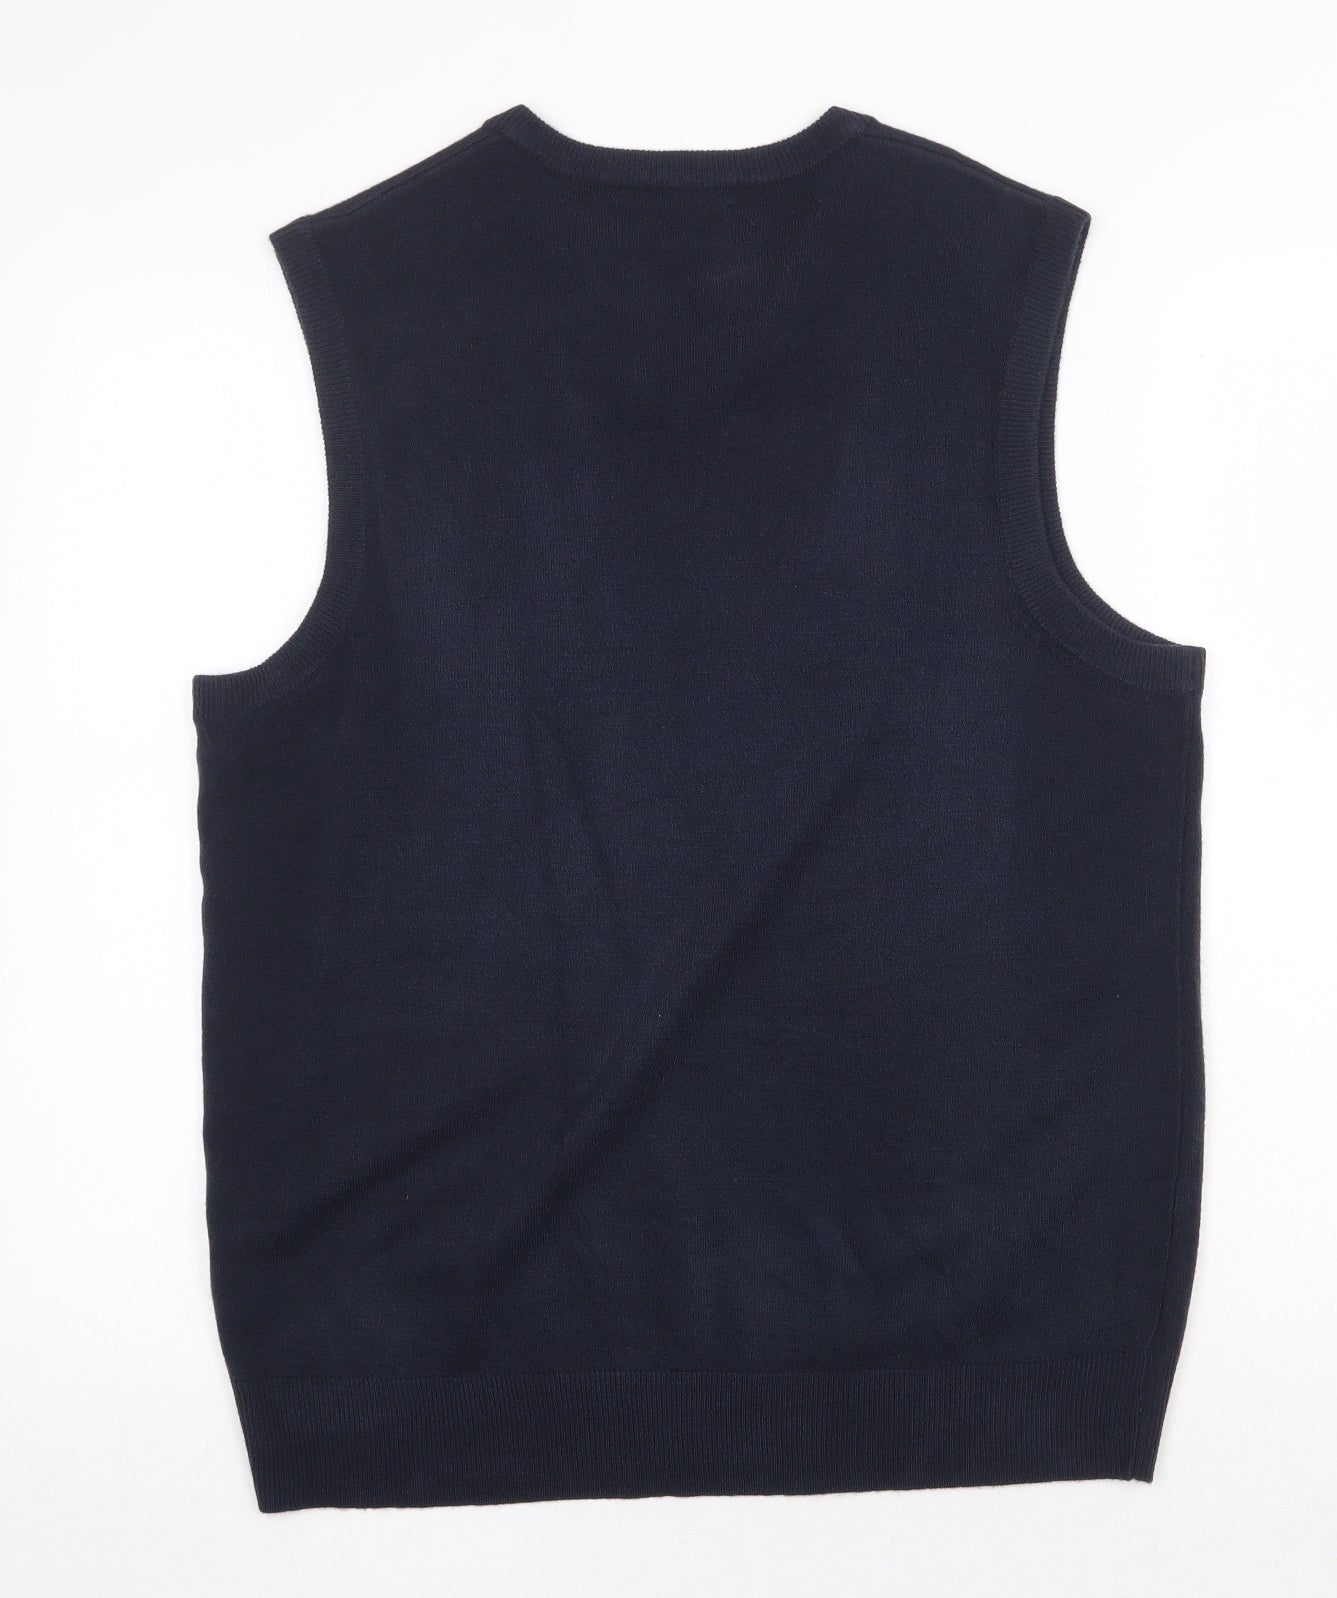 Atlantic Bay Mens Blue V-Neck Acrylic Vest Jumper Size M Sleeveless